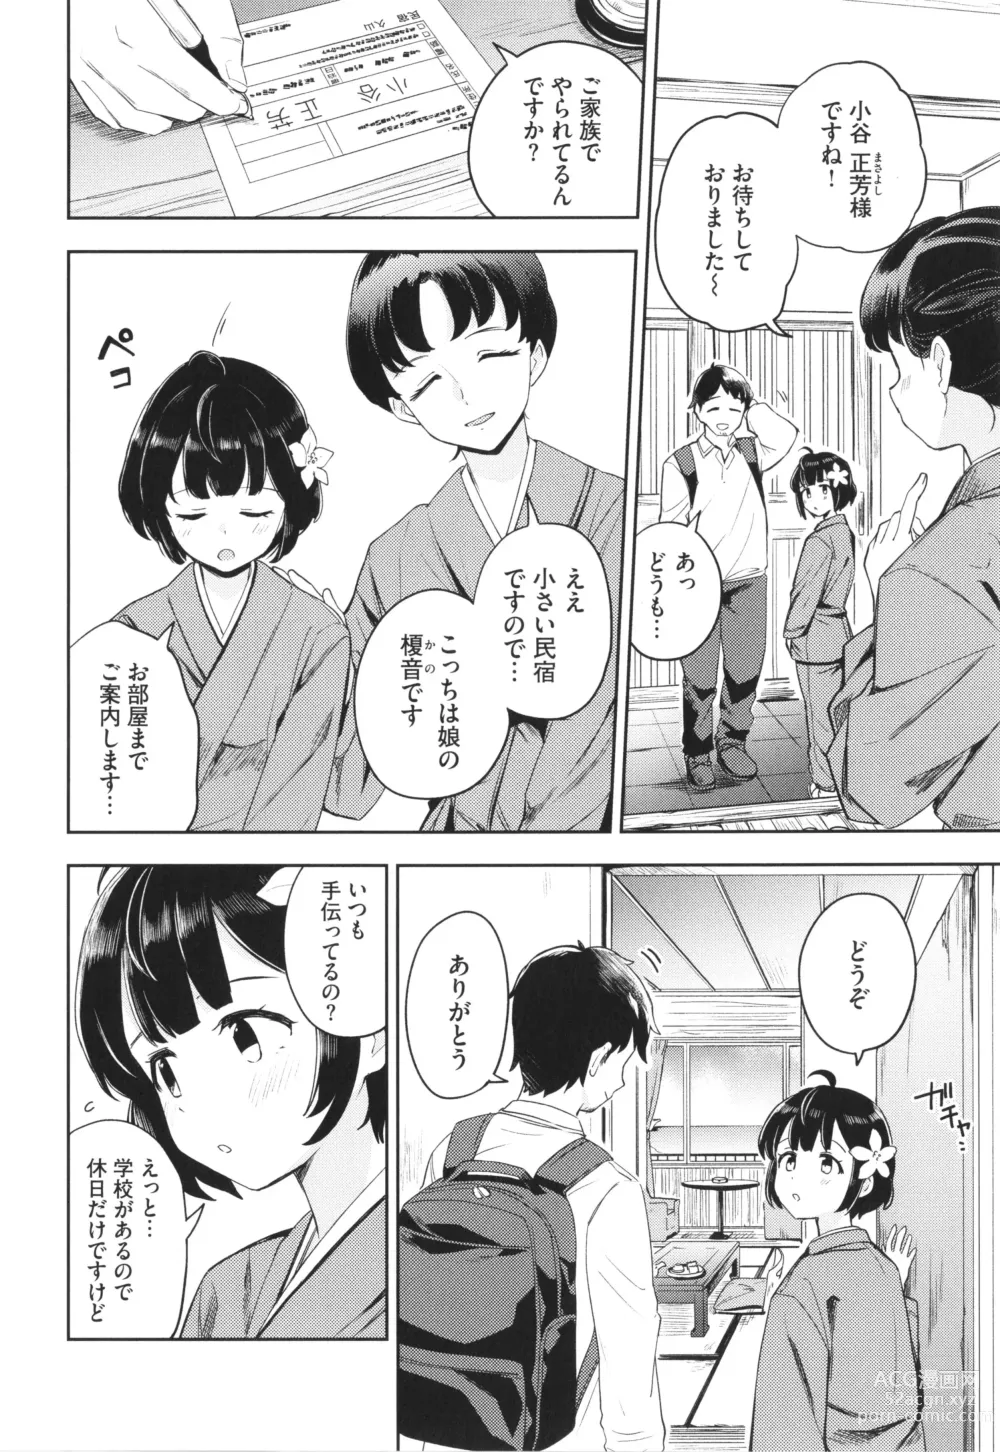 Page 5 of manga Secret Time